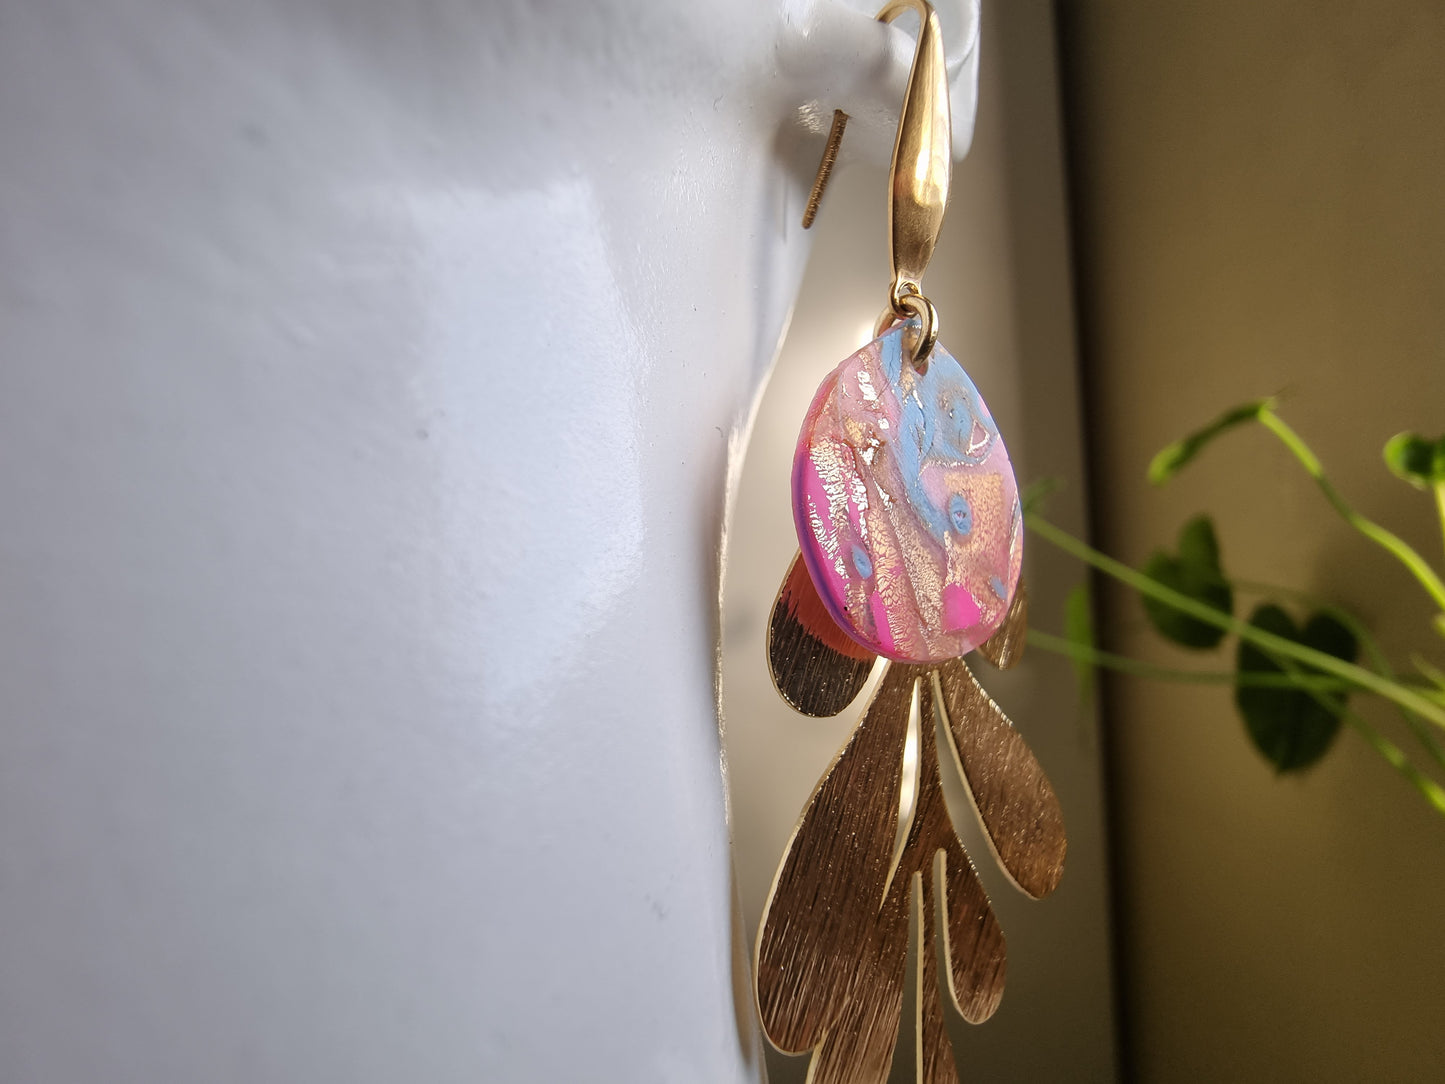 Hot Pink and Gold Mokume gane dangling earrings